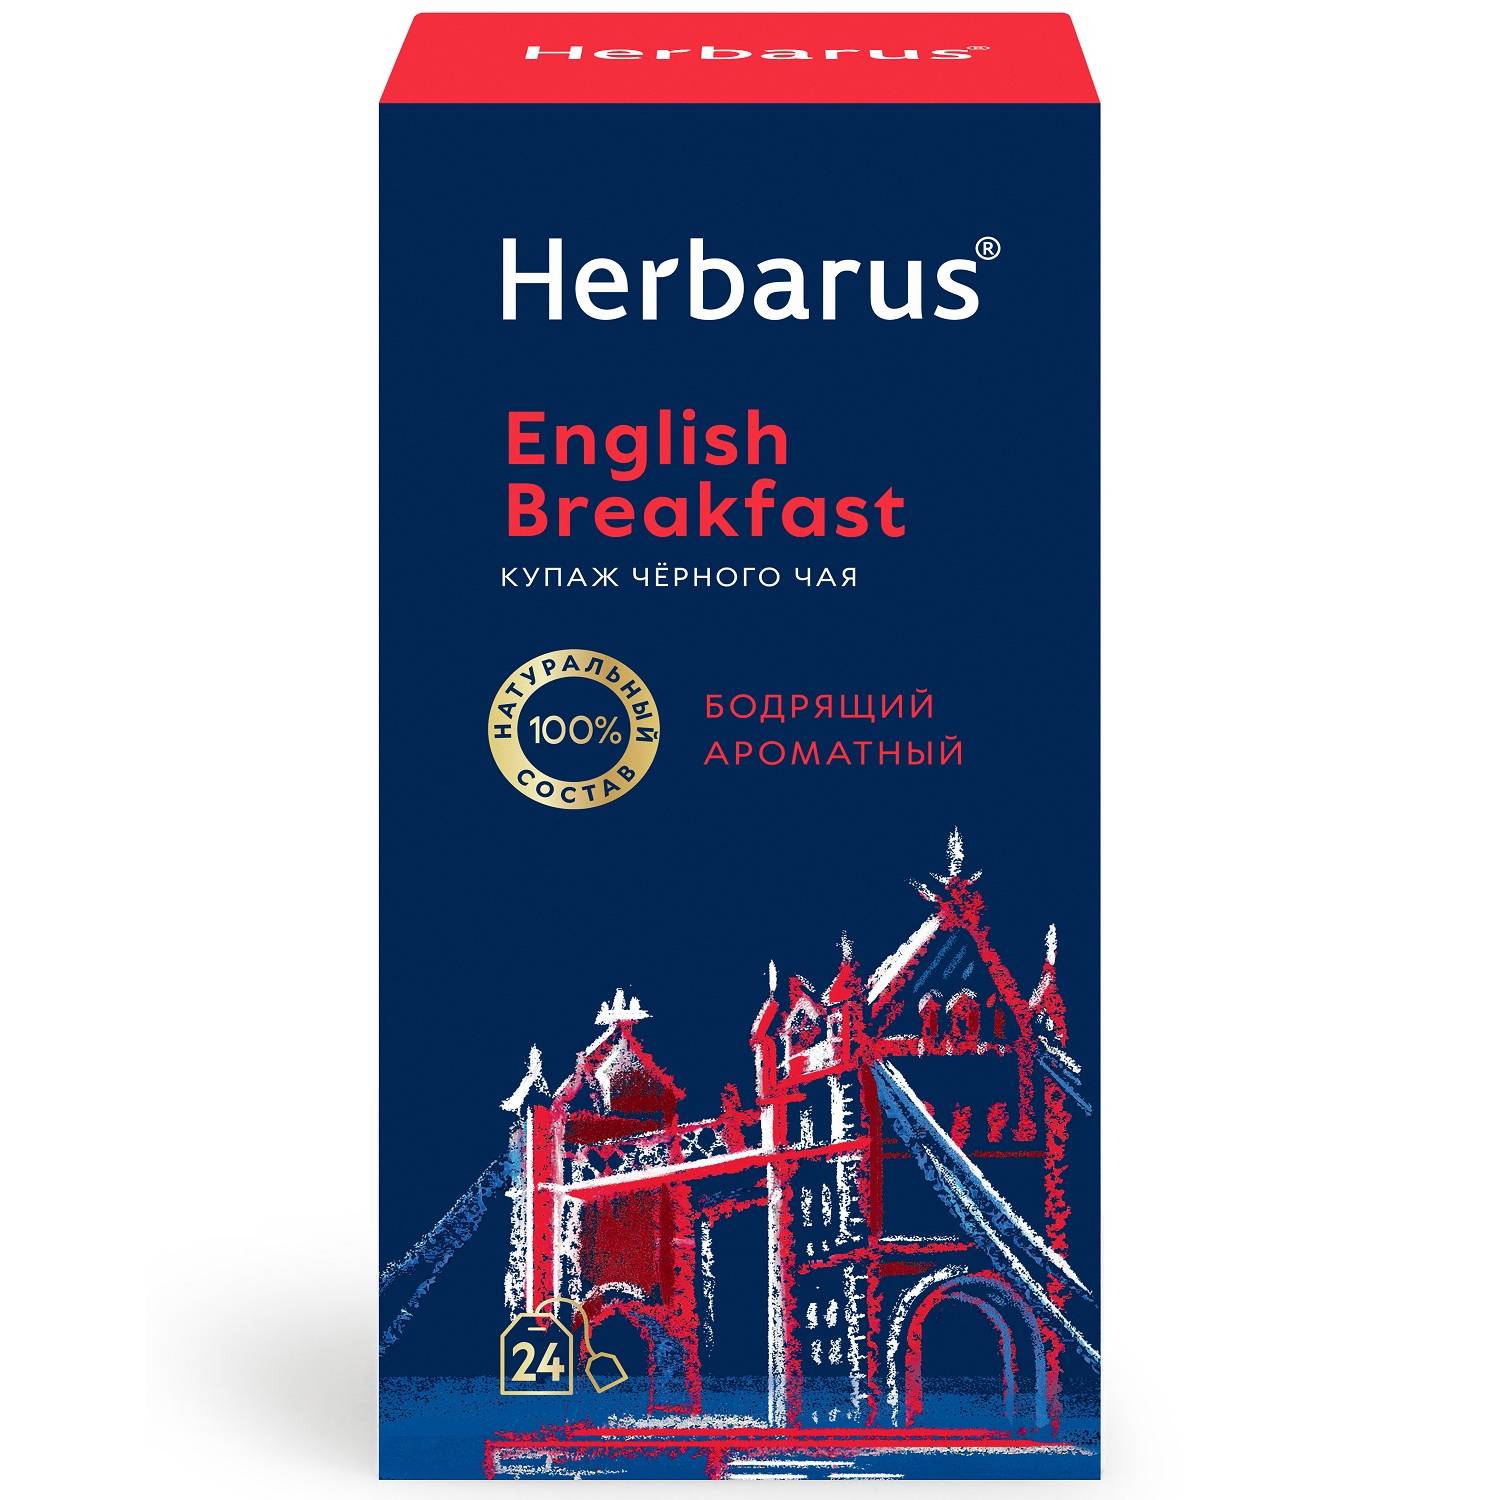 Herbarus Купаж черного чая English Breakfast, 24 пакетика х 2 г (Herbarus, Классический чай) herbarus чай улун с добавками нежный гармоничный 24 х 2 г herbarus чай с добавками